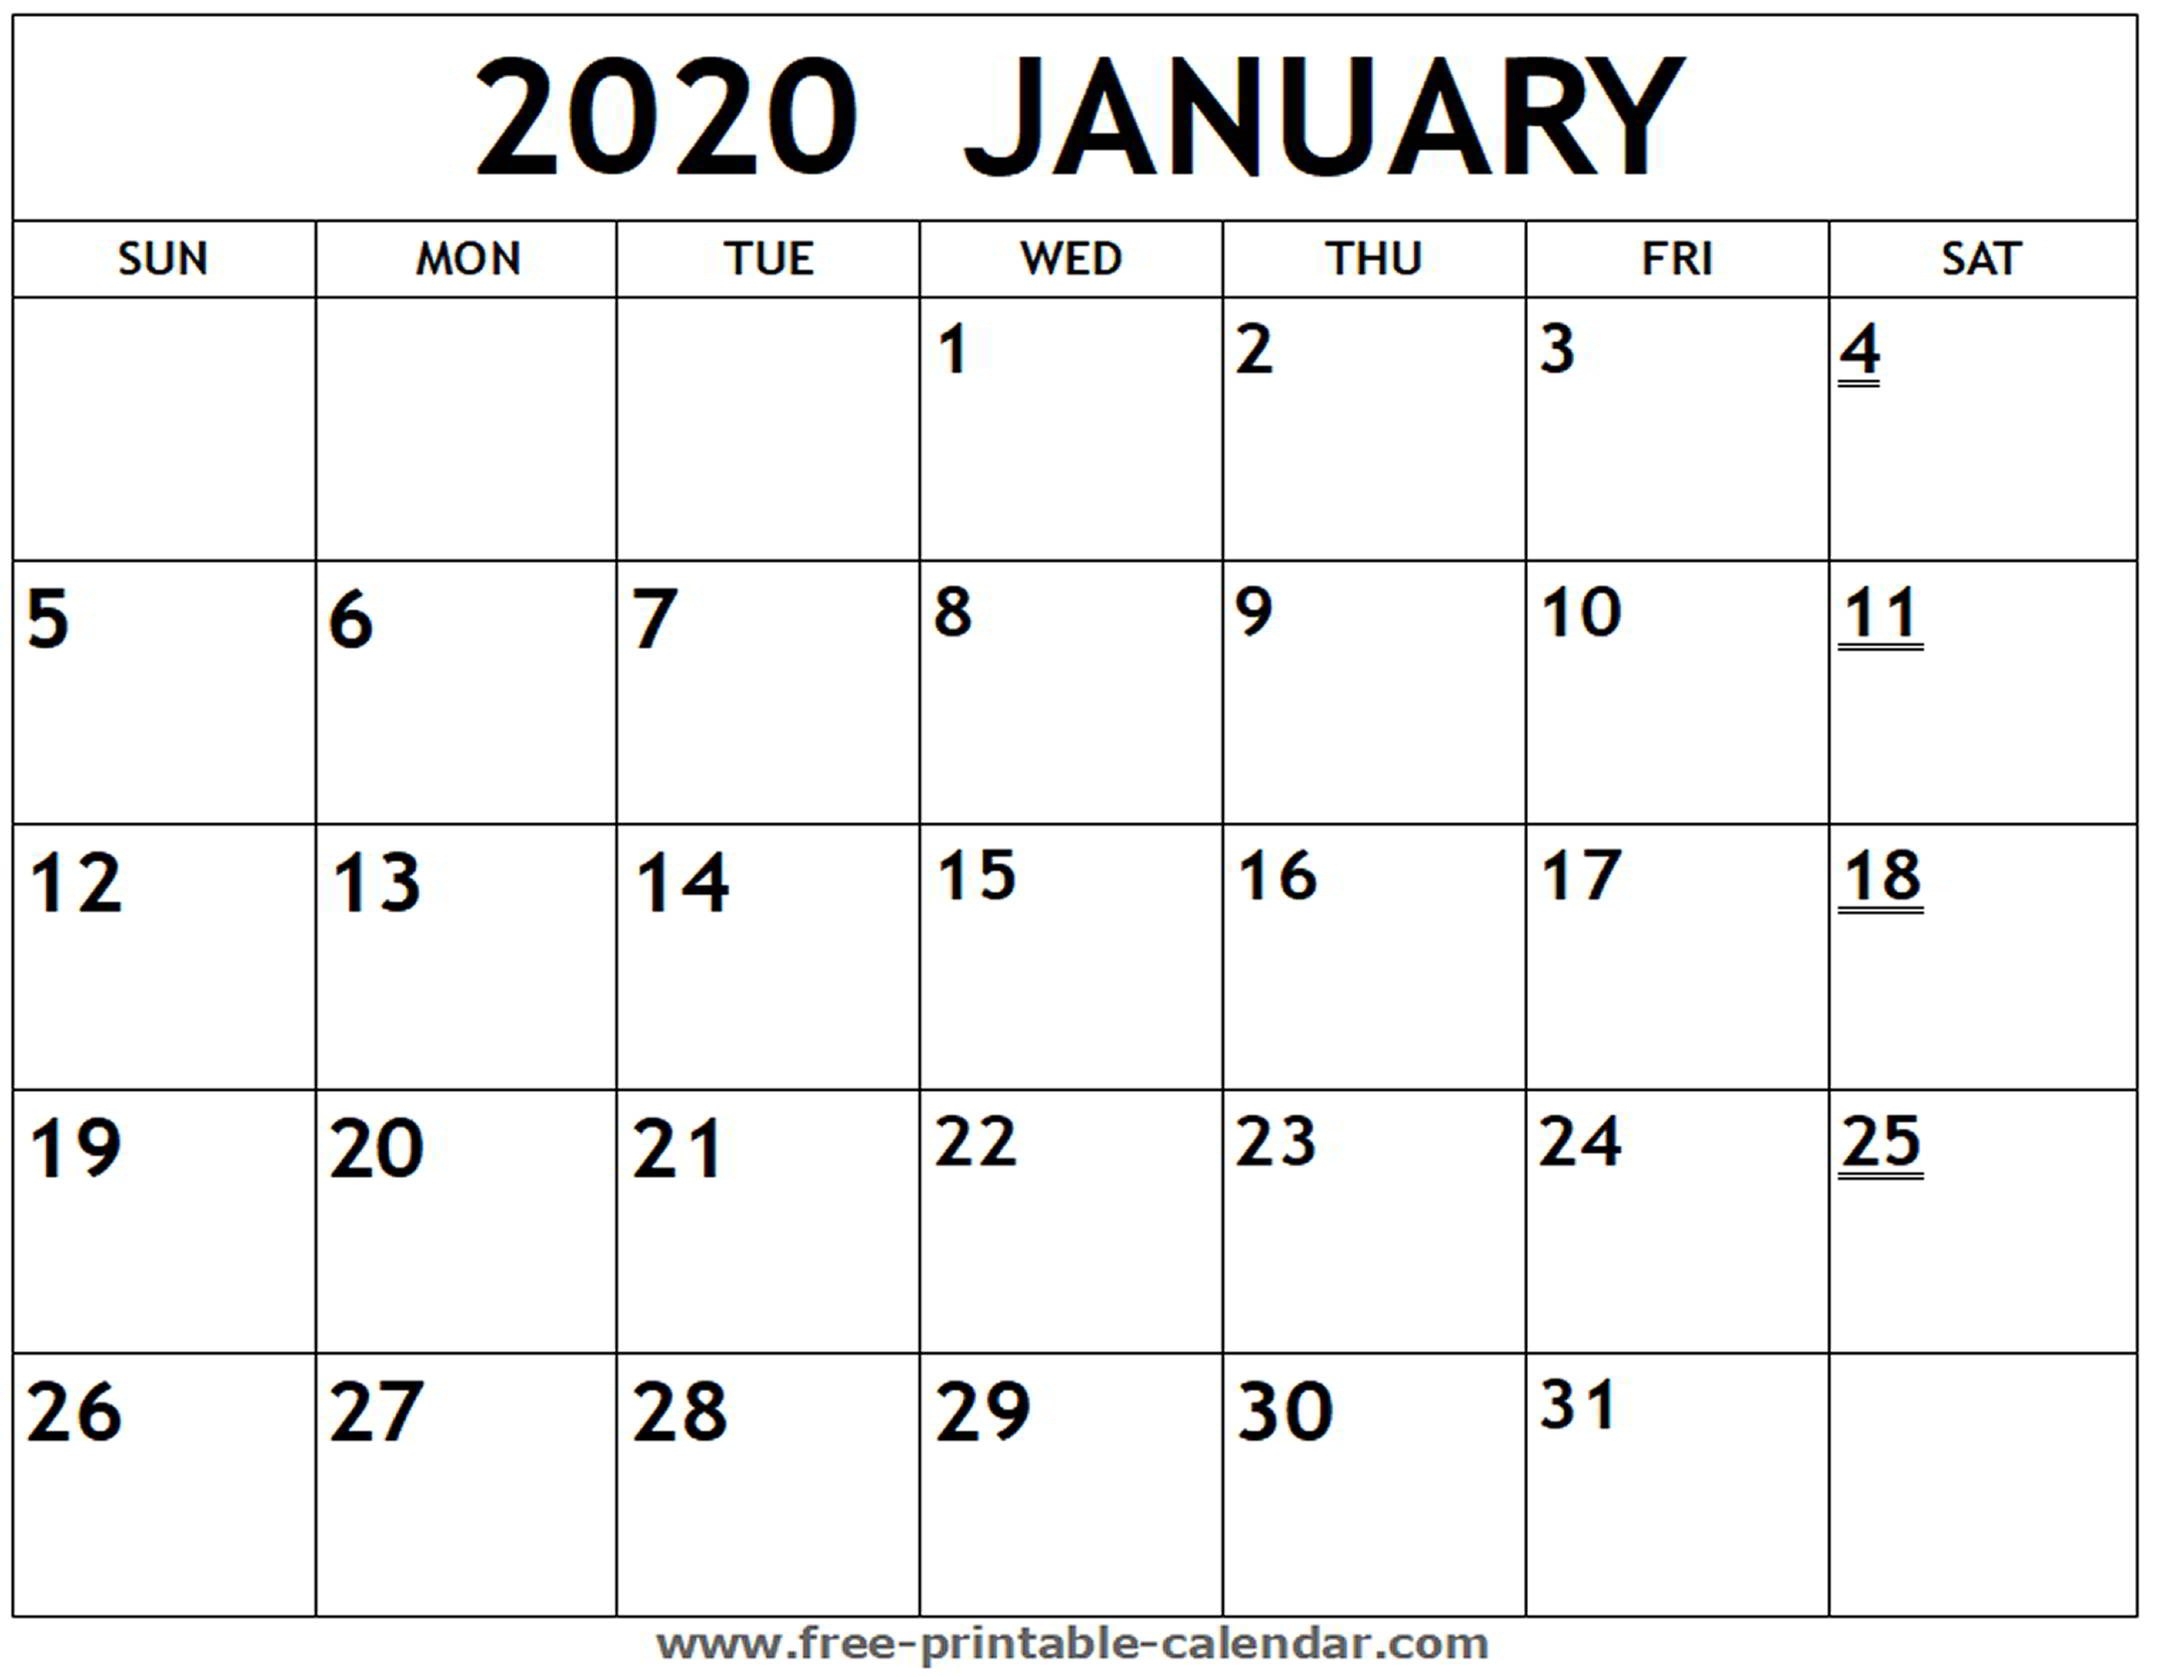 Free Printable Calendar 2020 Monthly - Wpa.wpart.co-Printable Bill Calendar 2020 Monthly